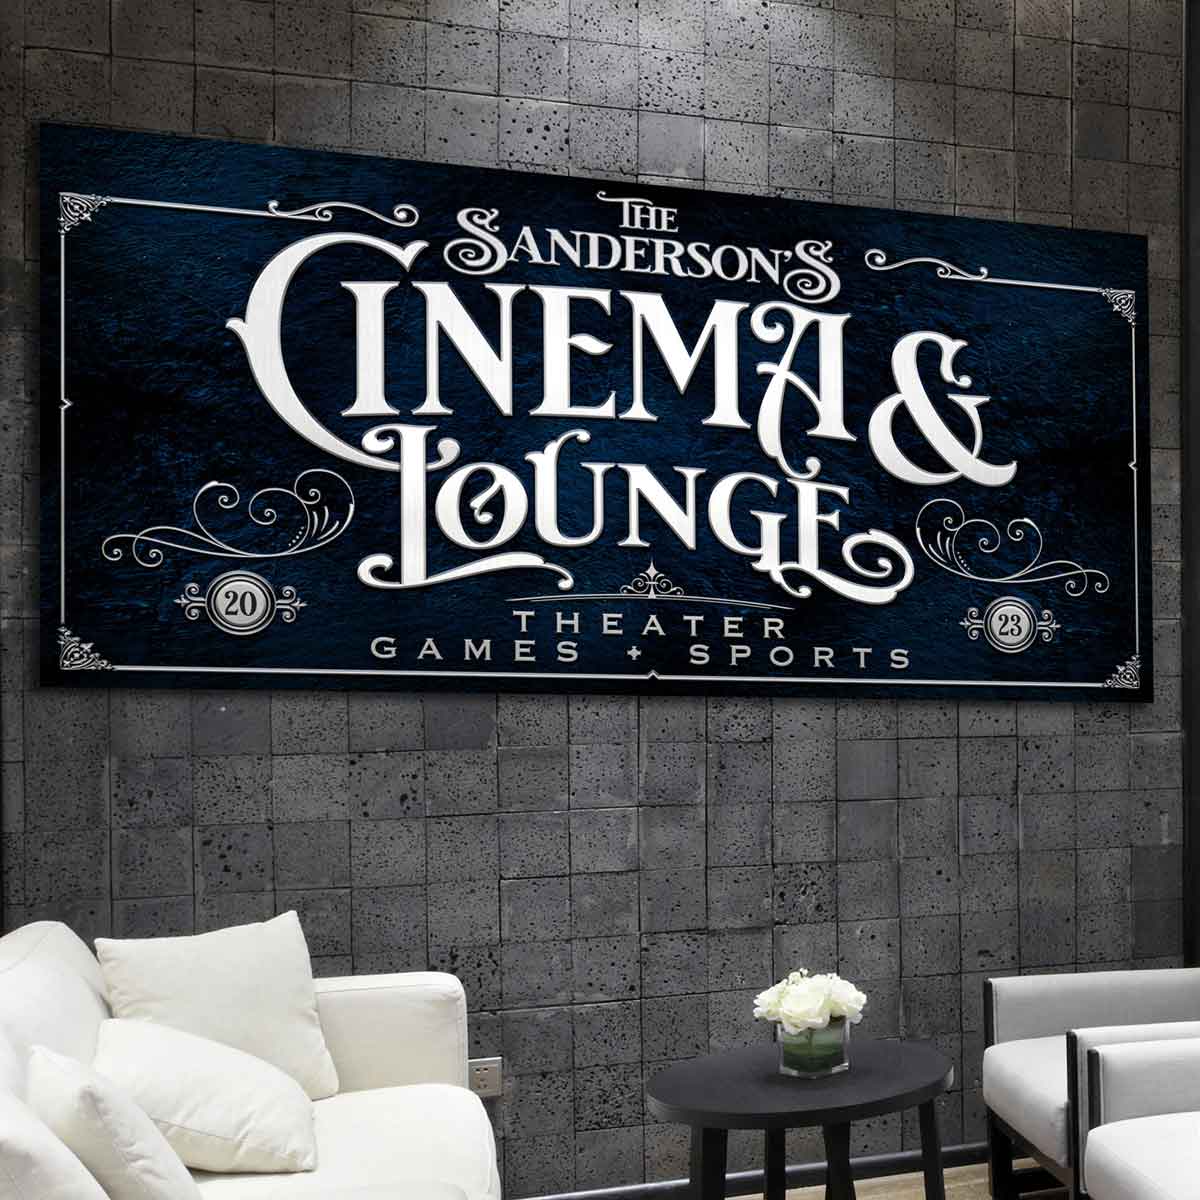 Theater Room Cinema Lounge Sign on dark navy blue textured background.